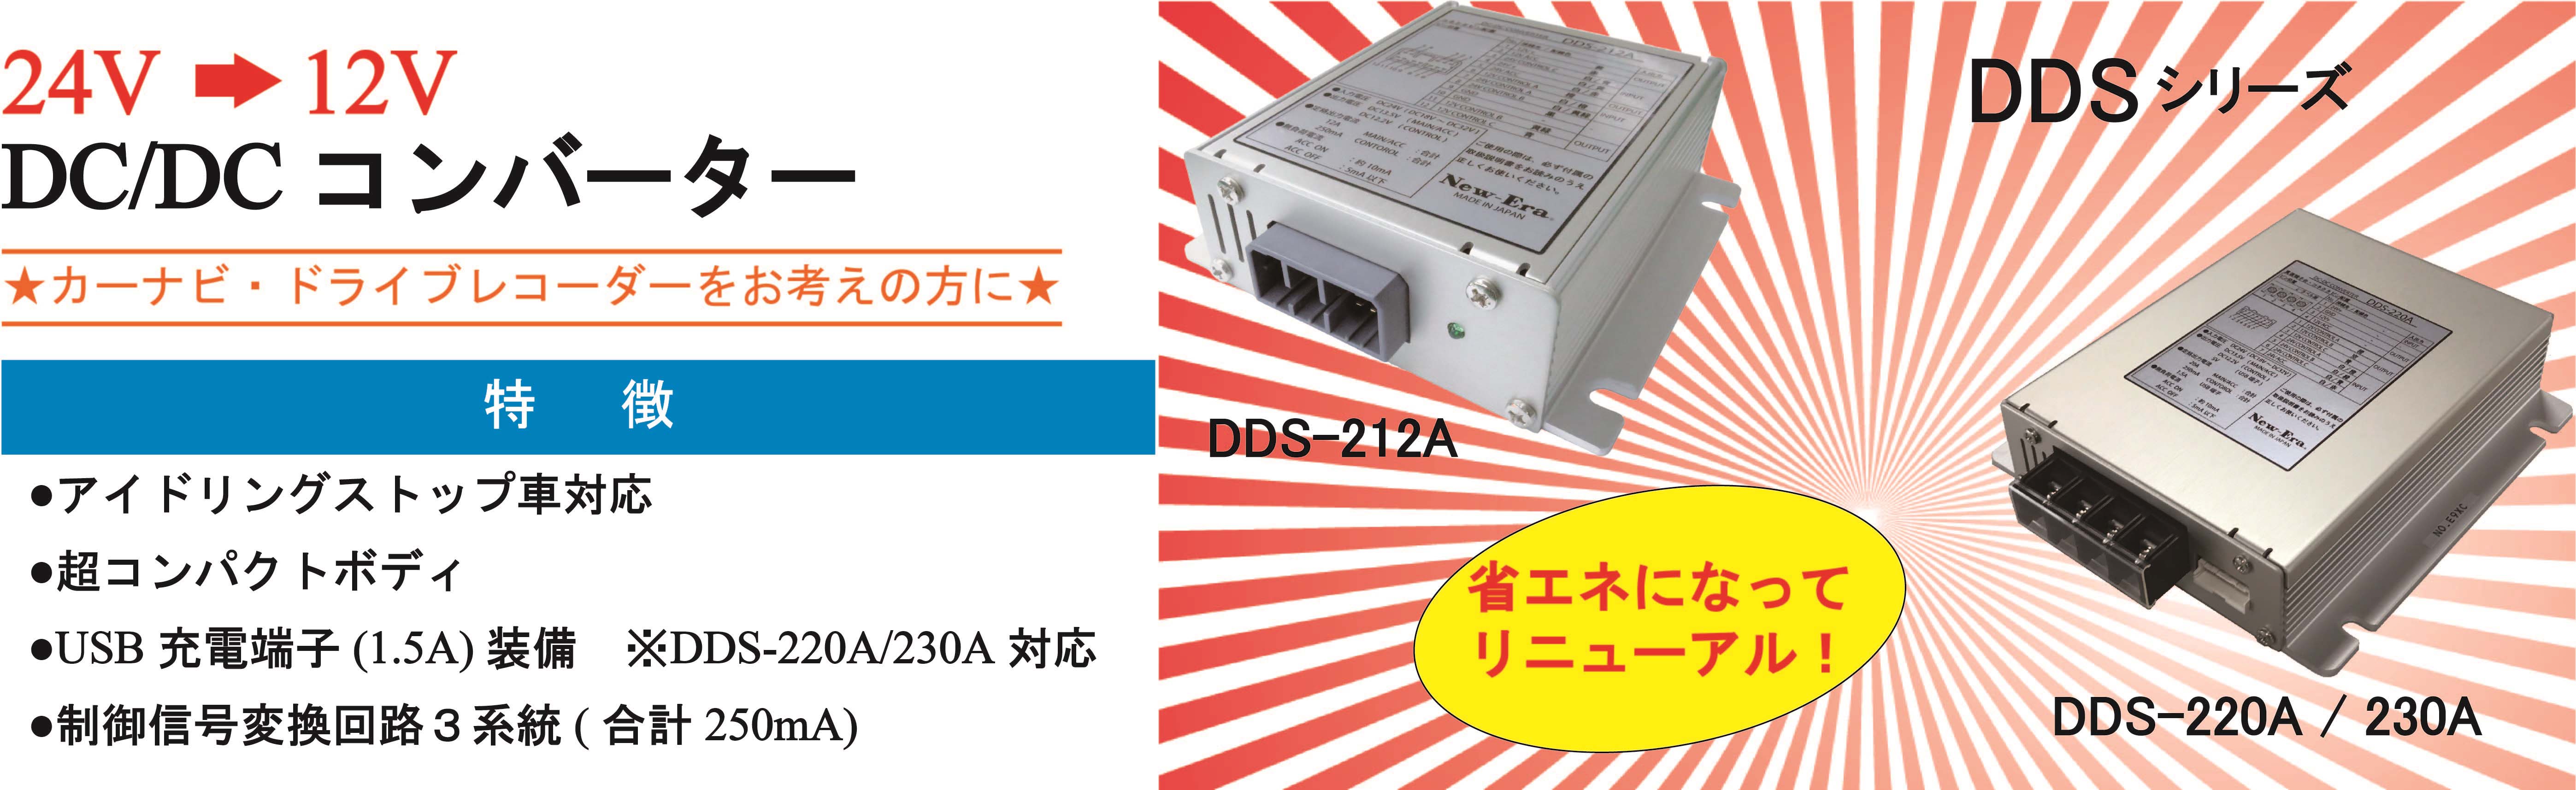 DDS-212A 220A